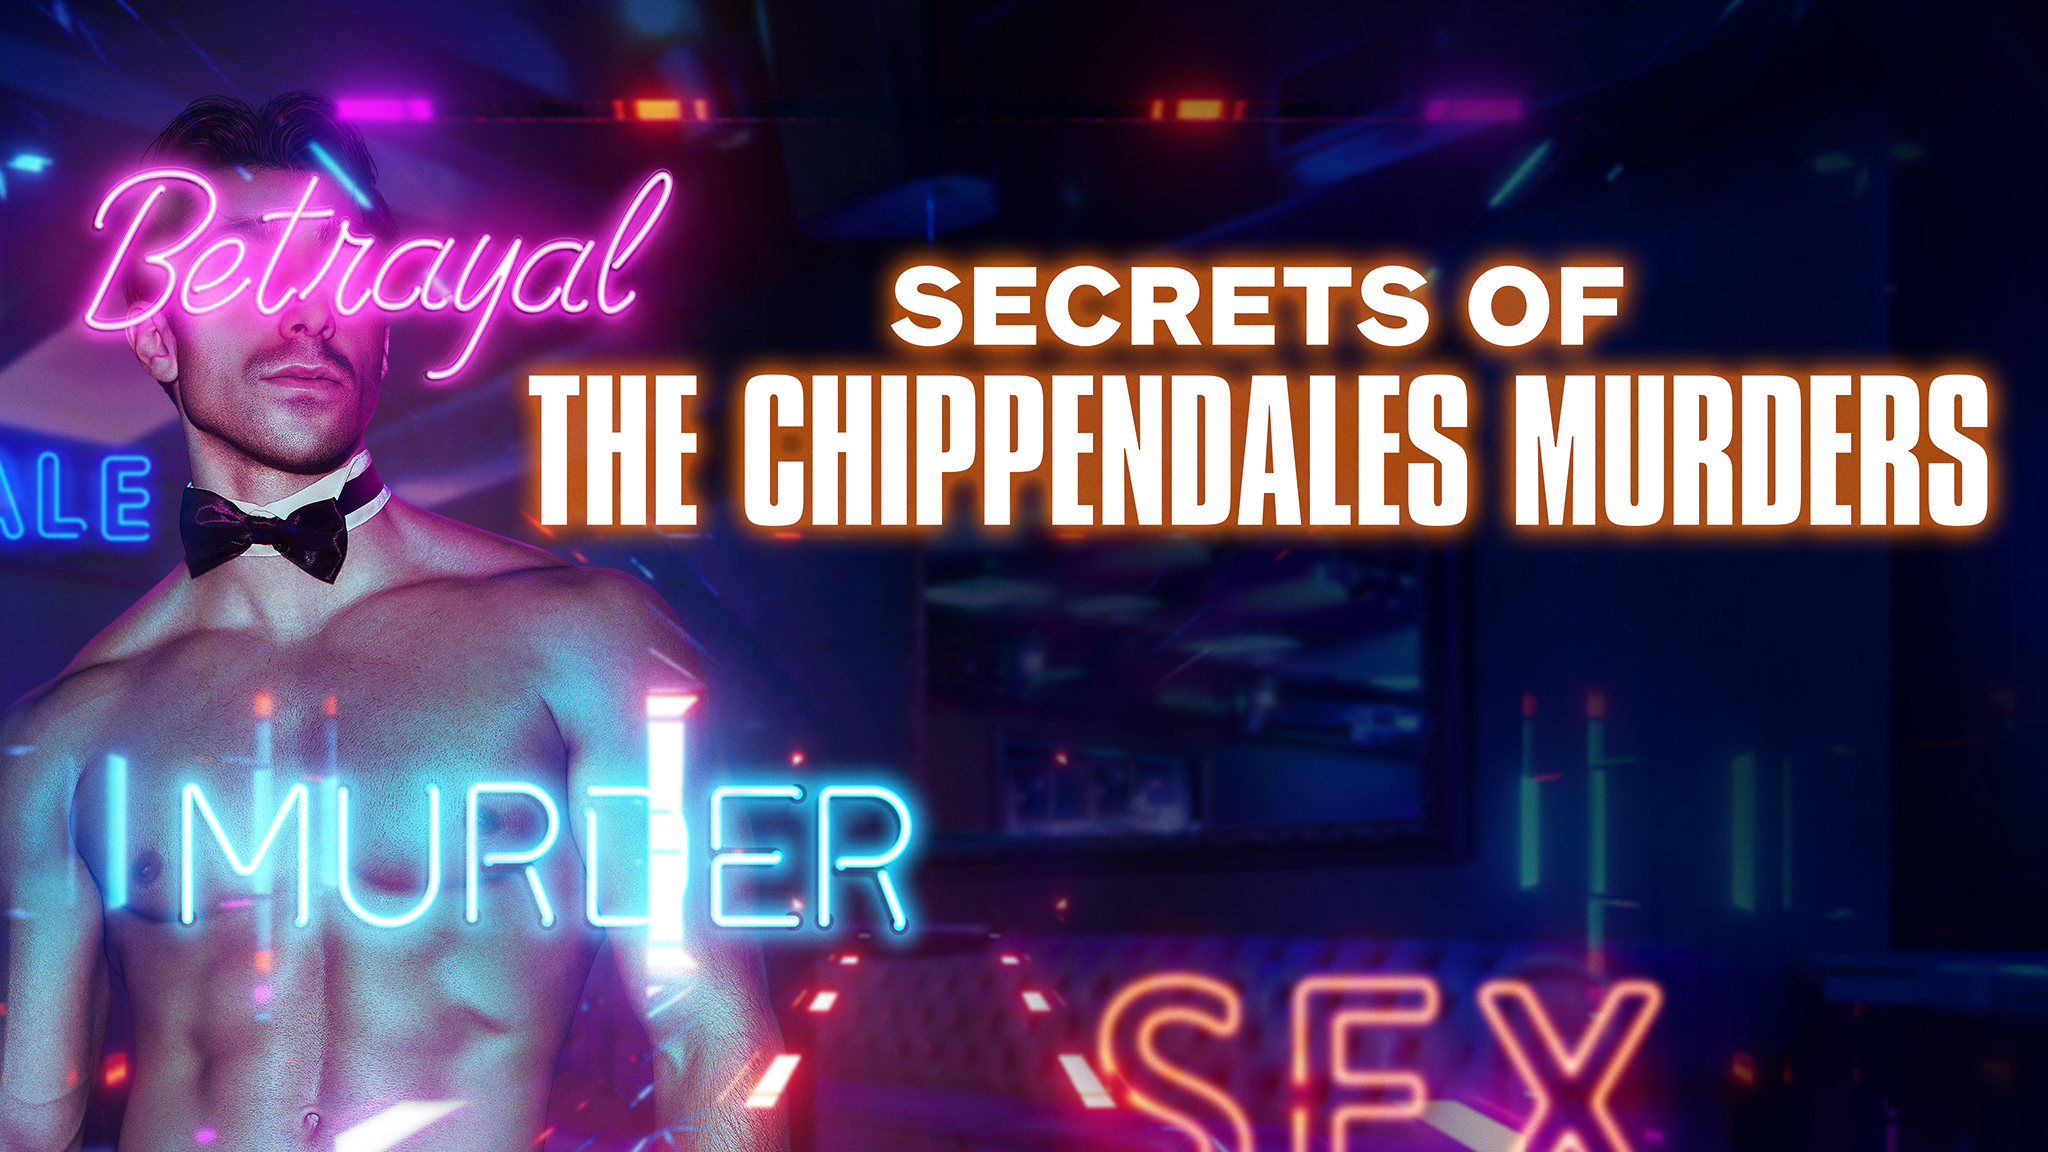 Watch Secrets of the Chippendales Murders - Season 1